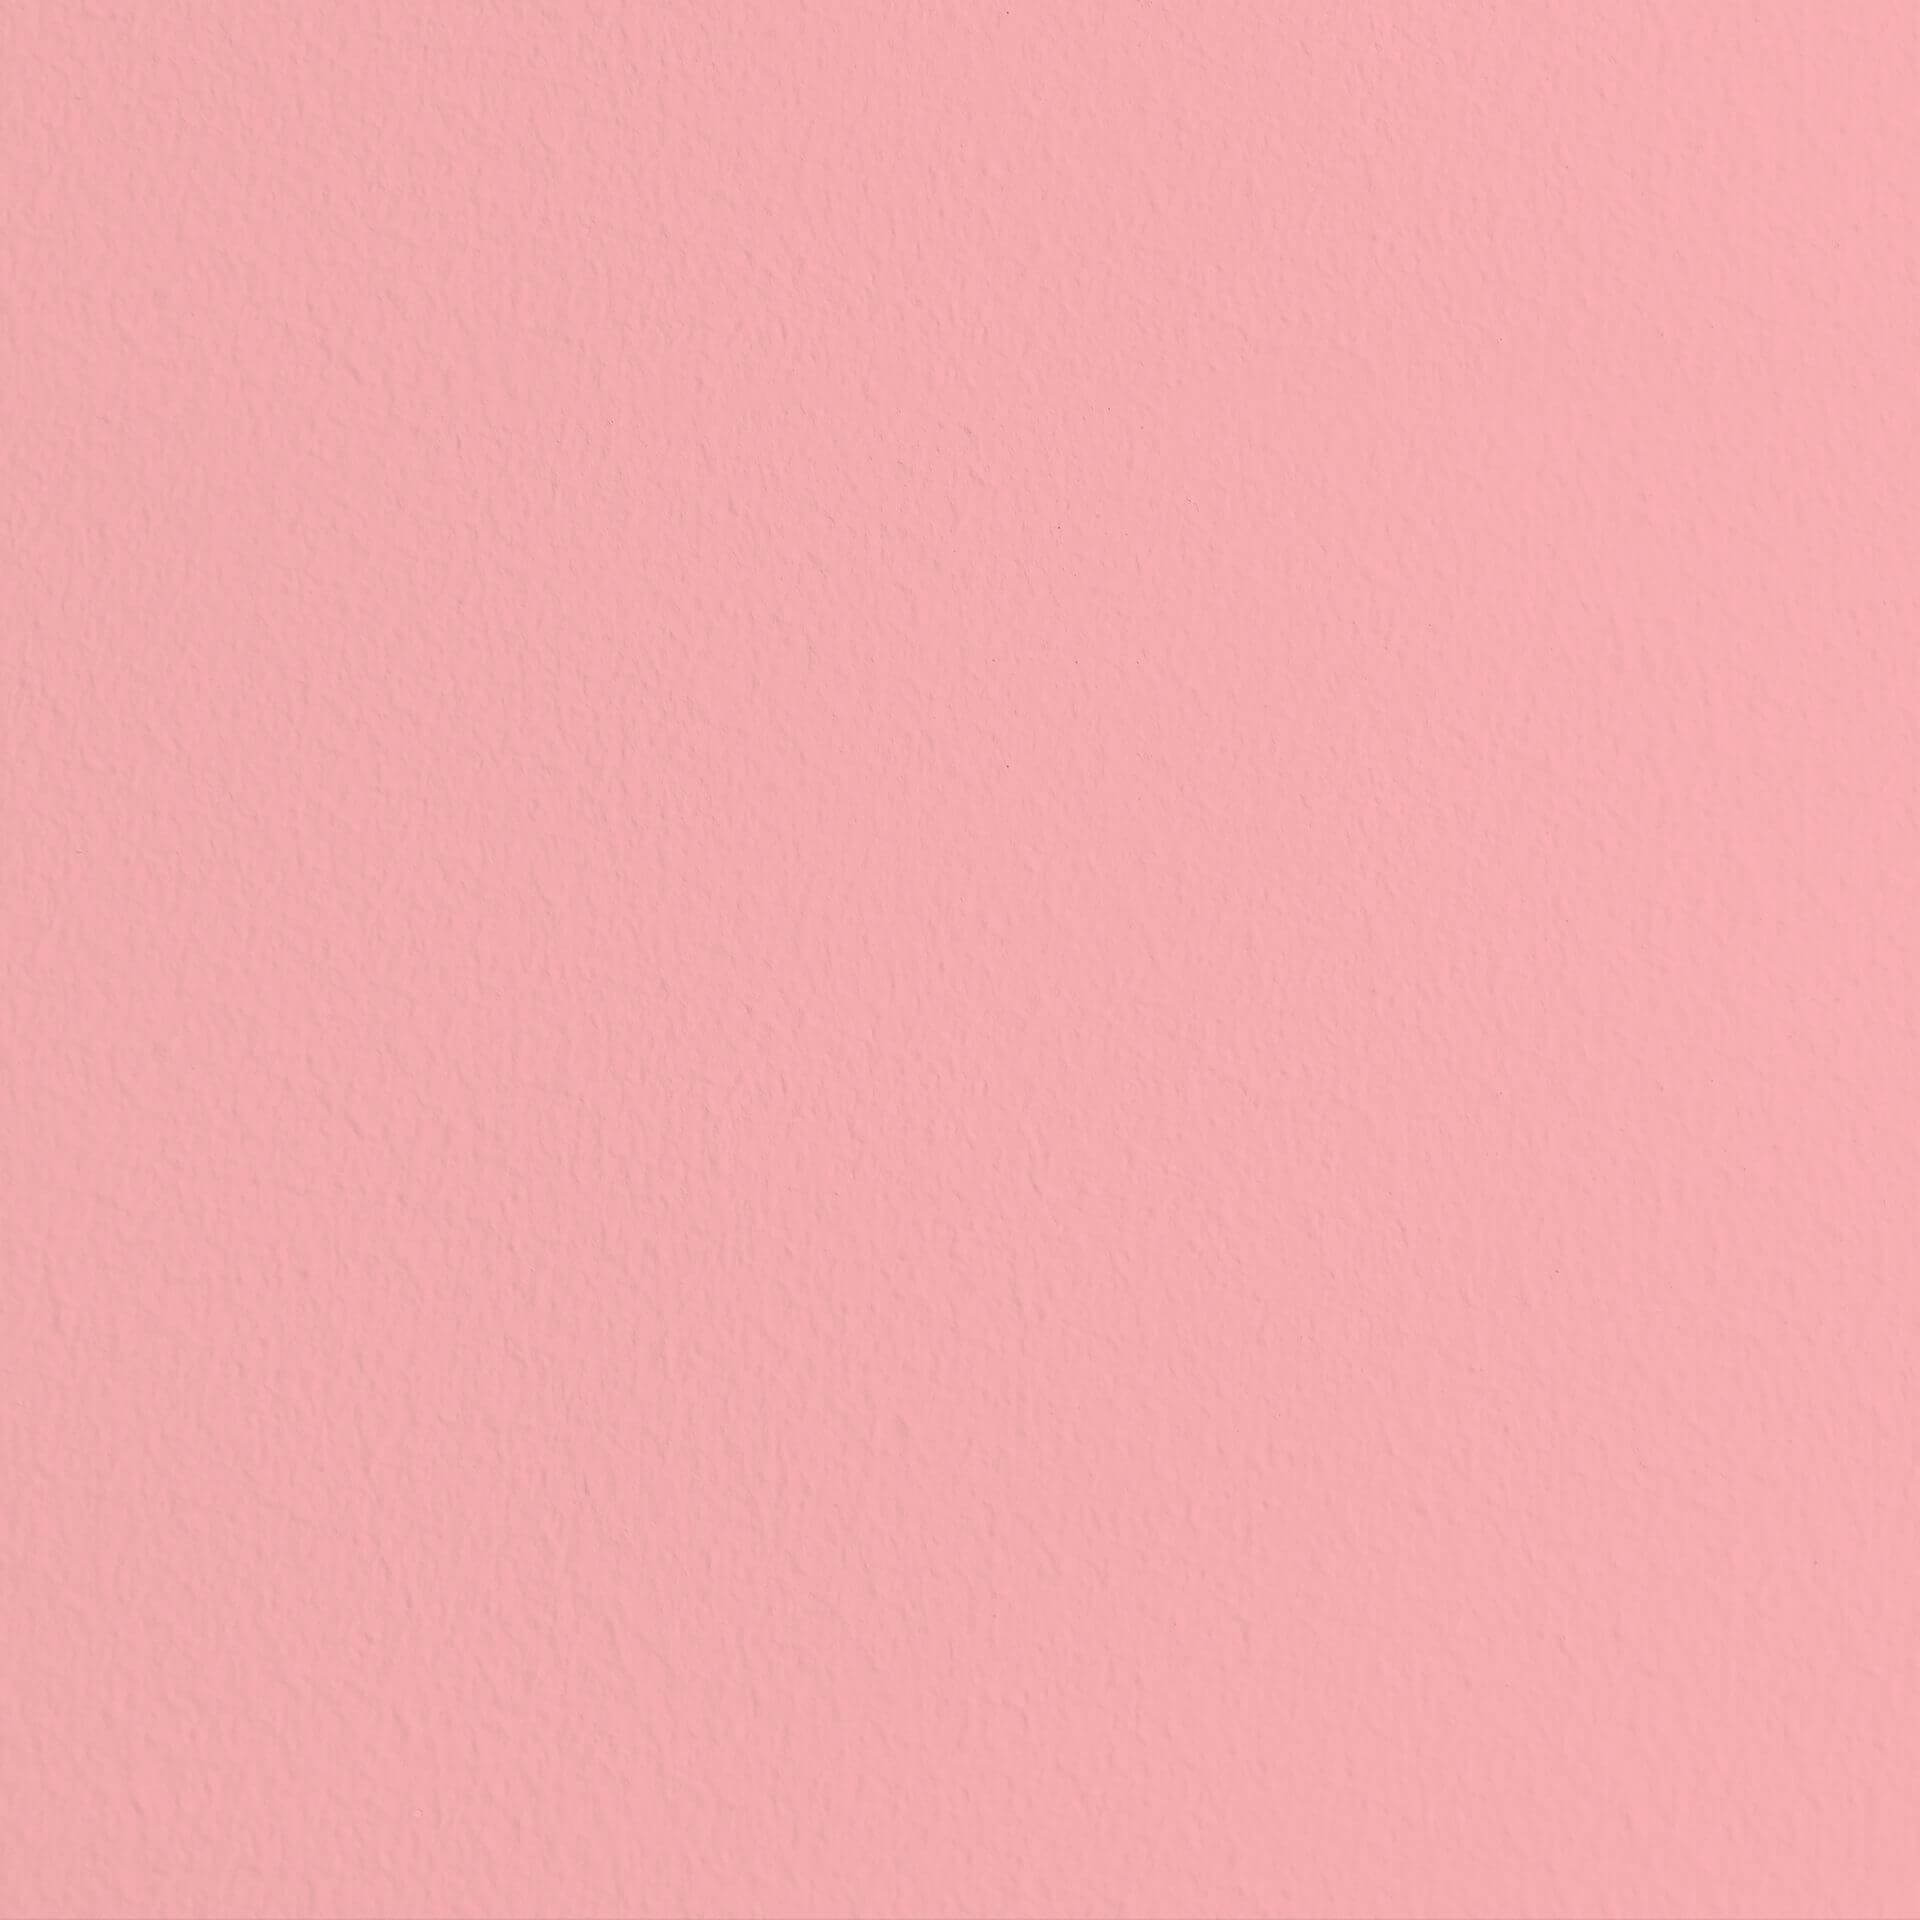 Mylands My Pink House - Marble Matt Emulsion / Wandfarbe, 2.5L